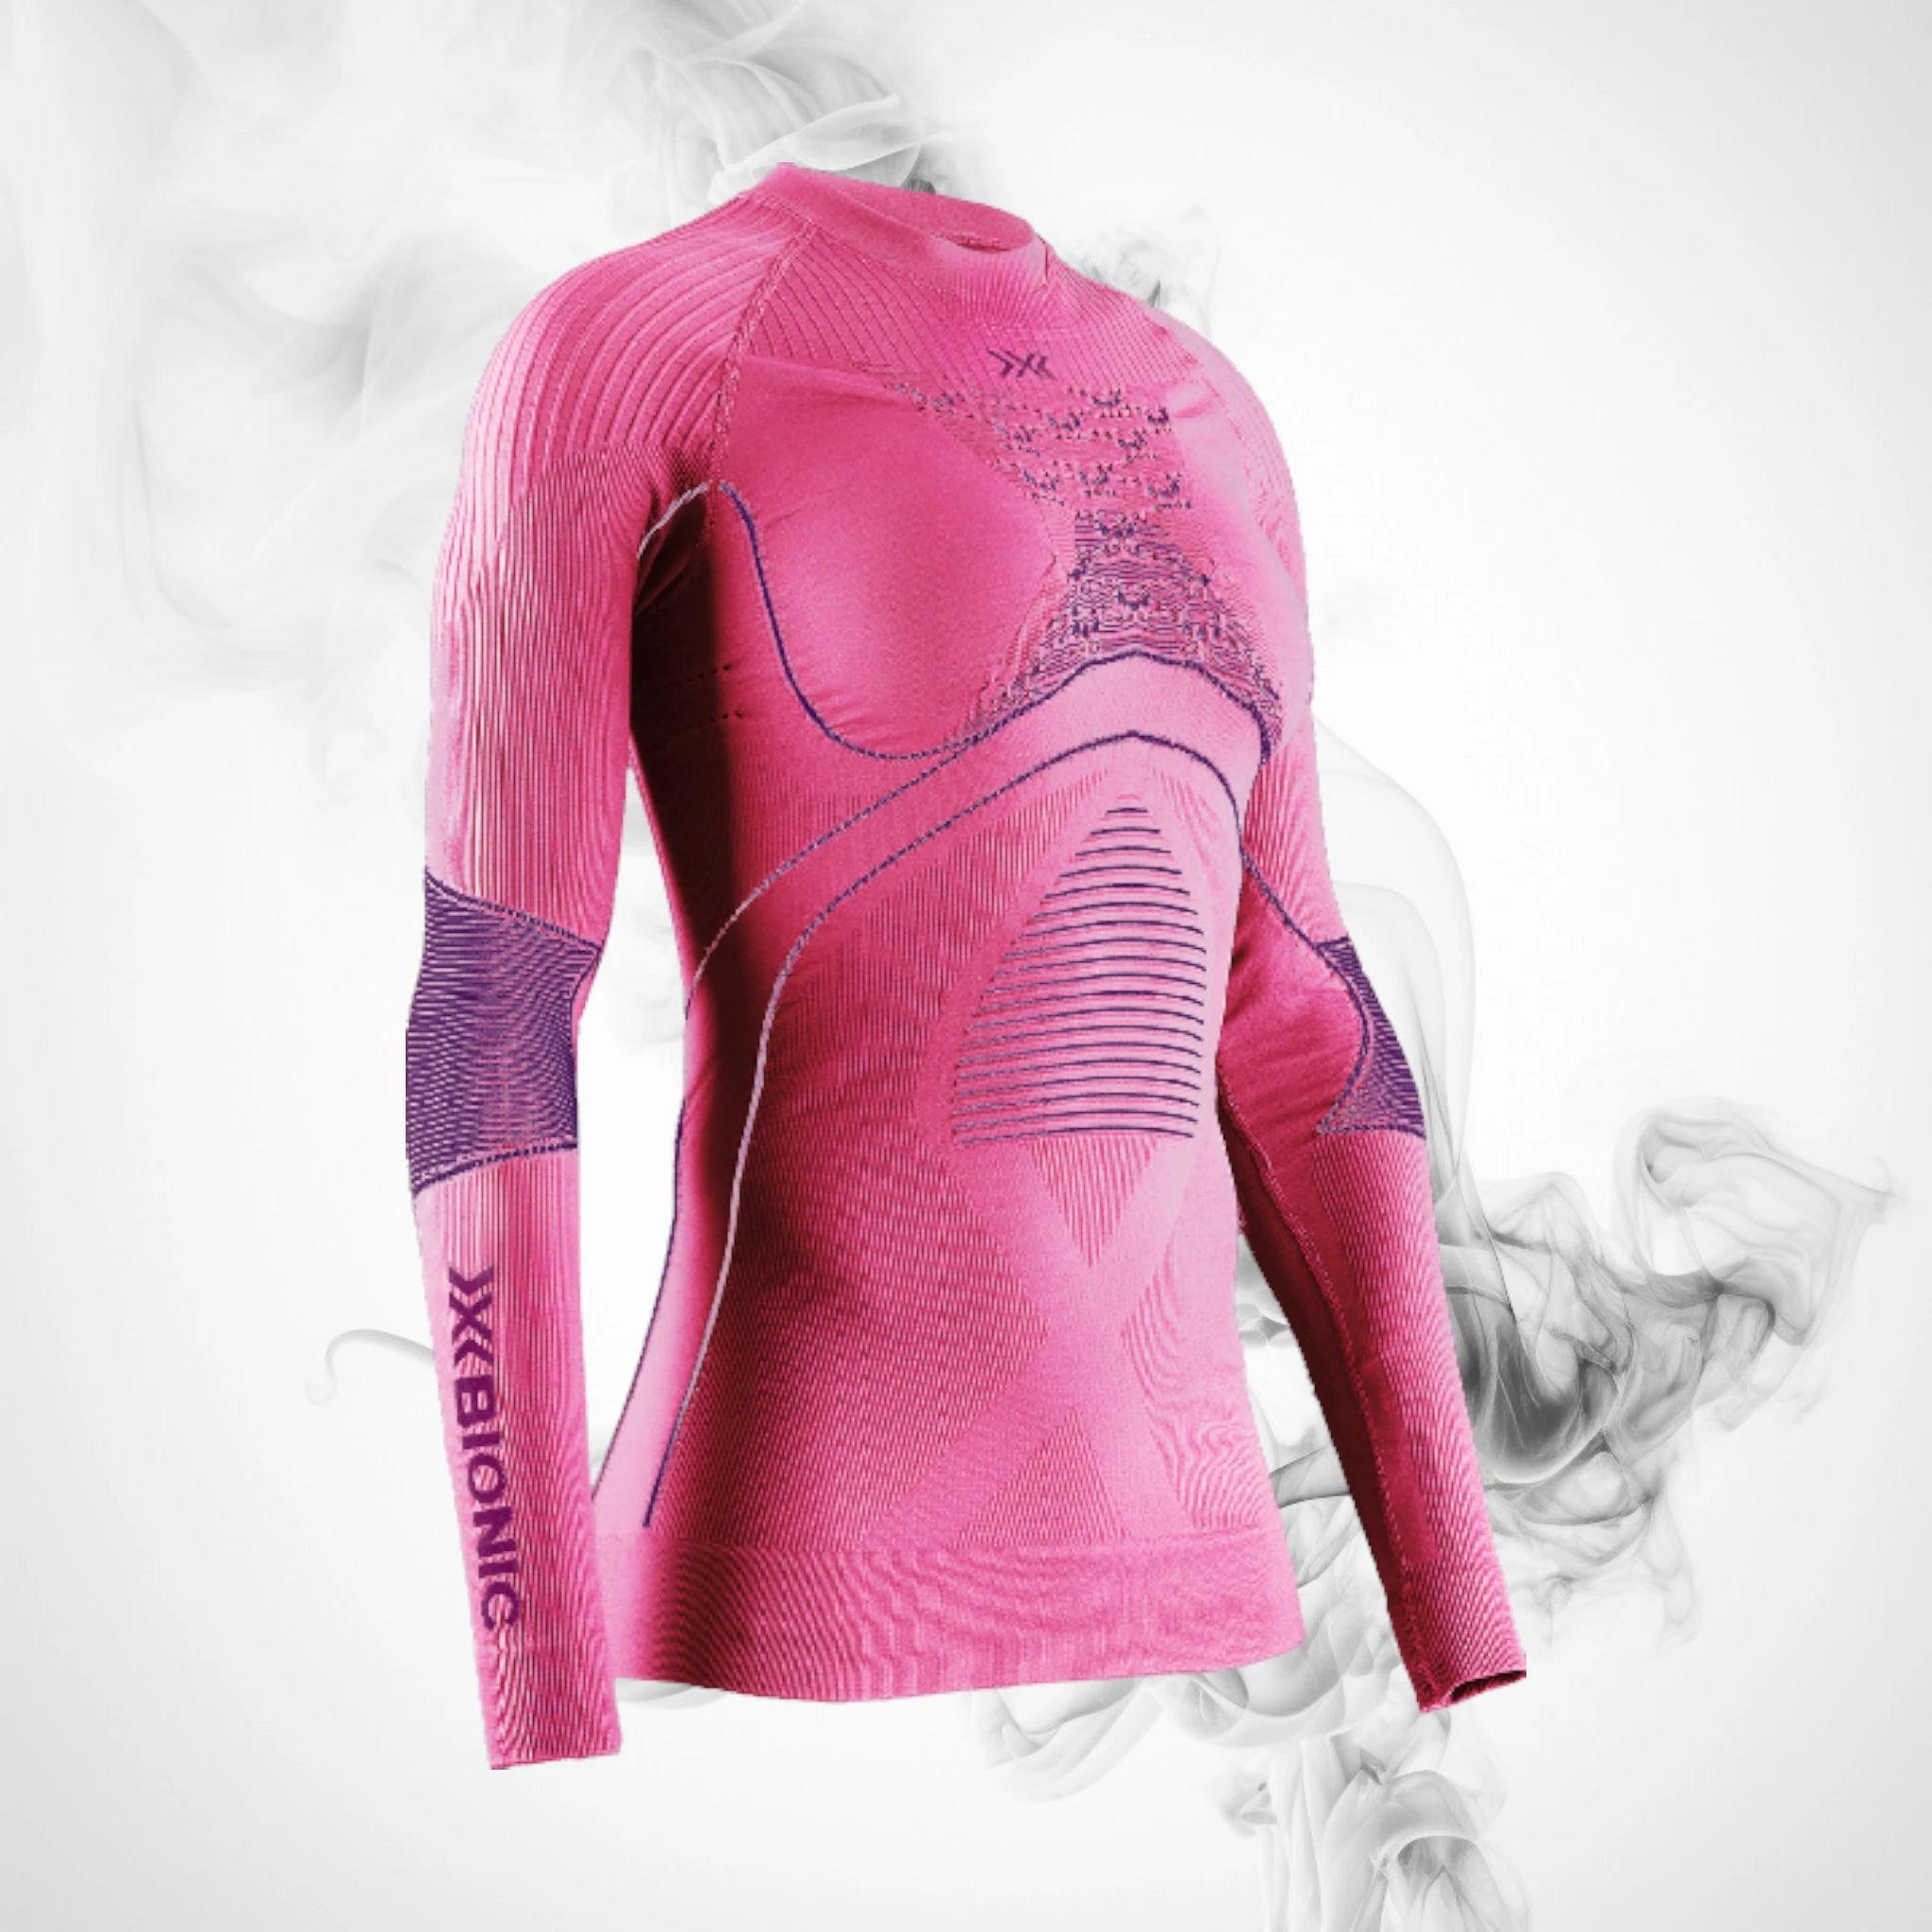 Ski Thermal underwear X-bionic Energy Accumulator 4.0 Shirt LG SL Wmn Magnolia Purple/Fuchsia - 2023/24 - Dash Racegear Dash Racegear, Thermal Wear underwear